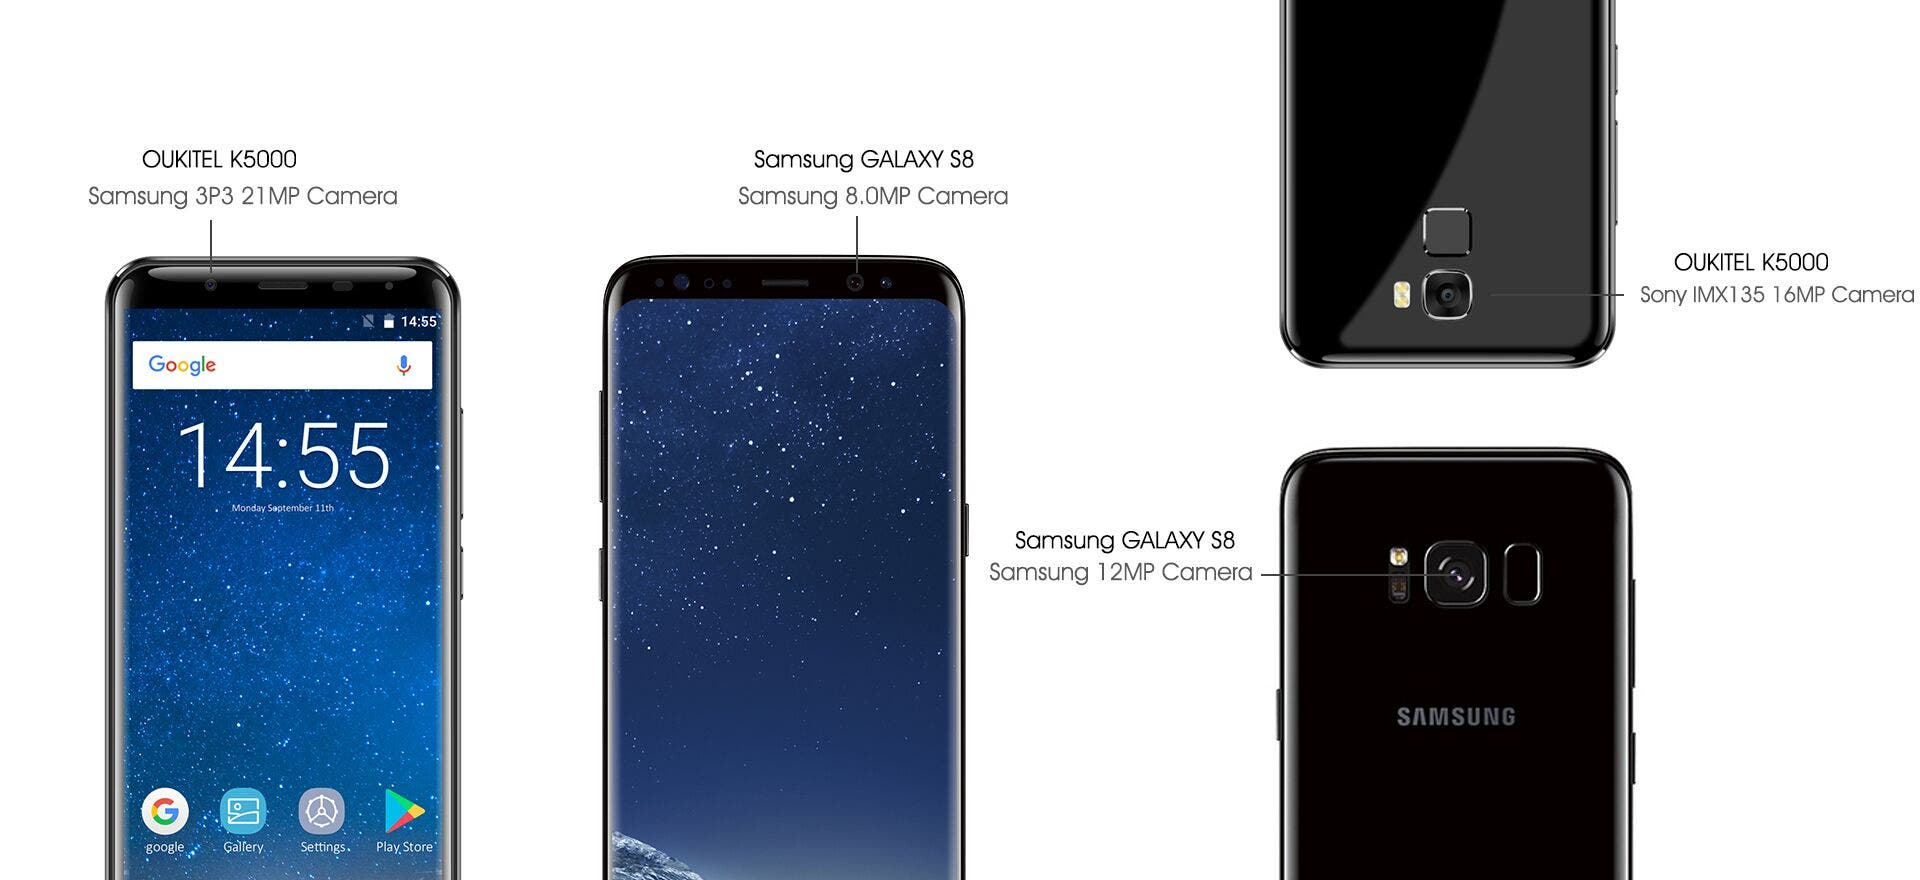 Oukitel K5000 vs Samsung Galaxy S8